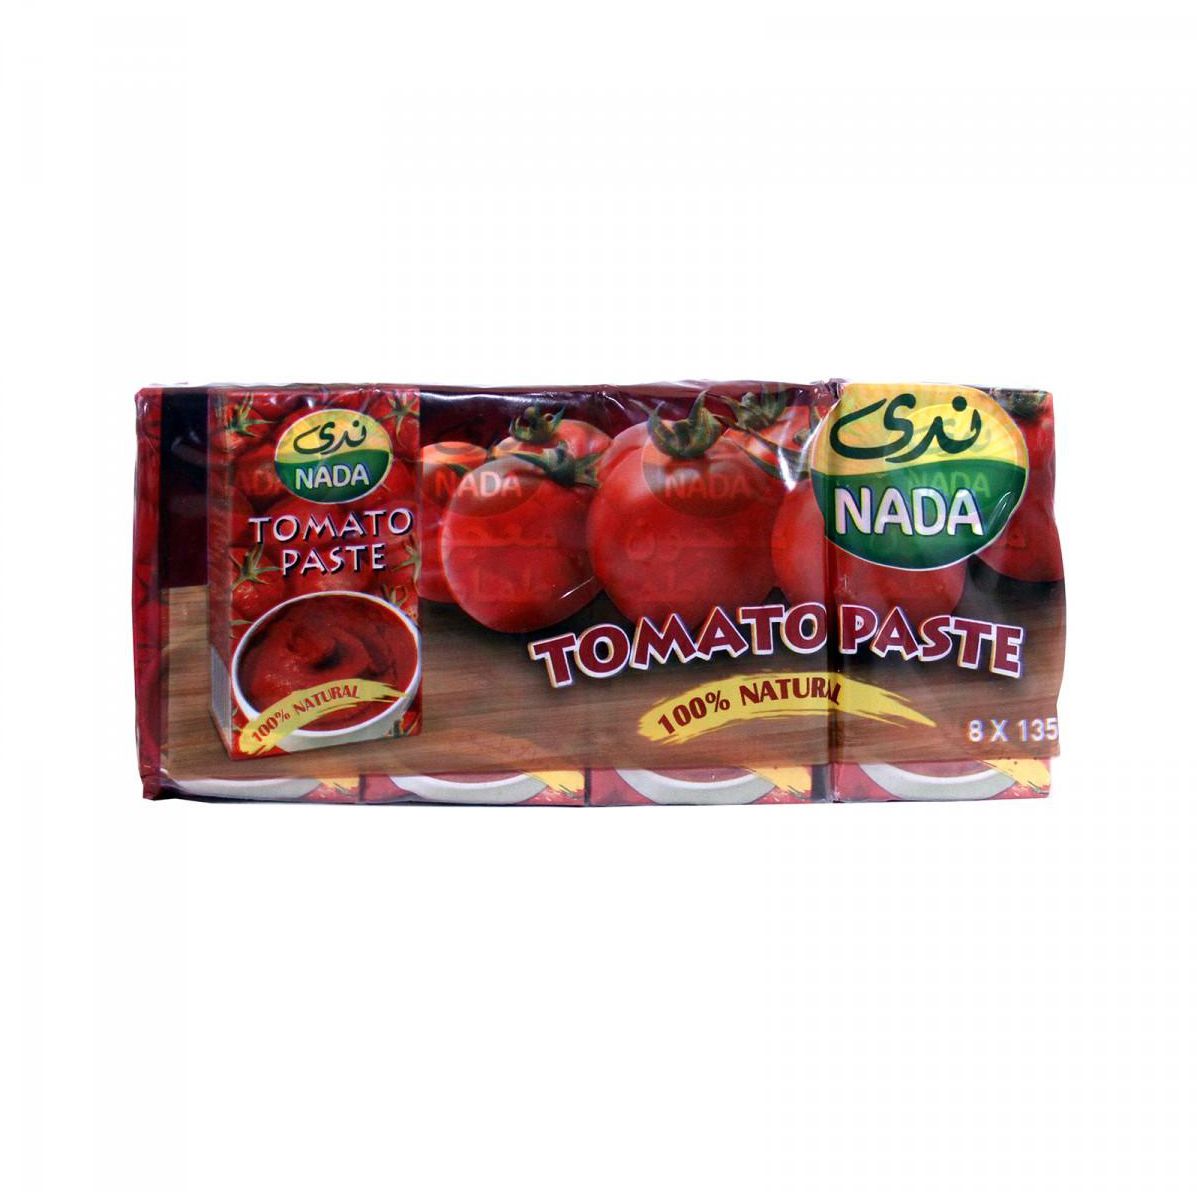 Nada Tomato Paste 8X135g